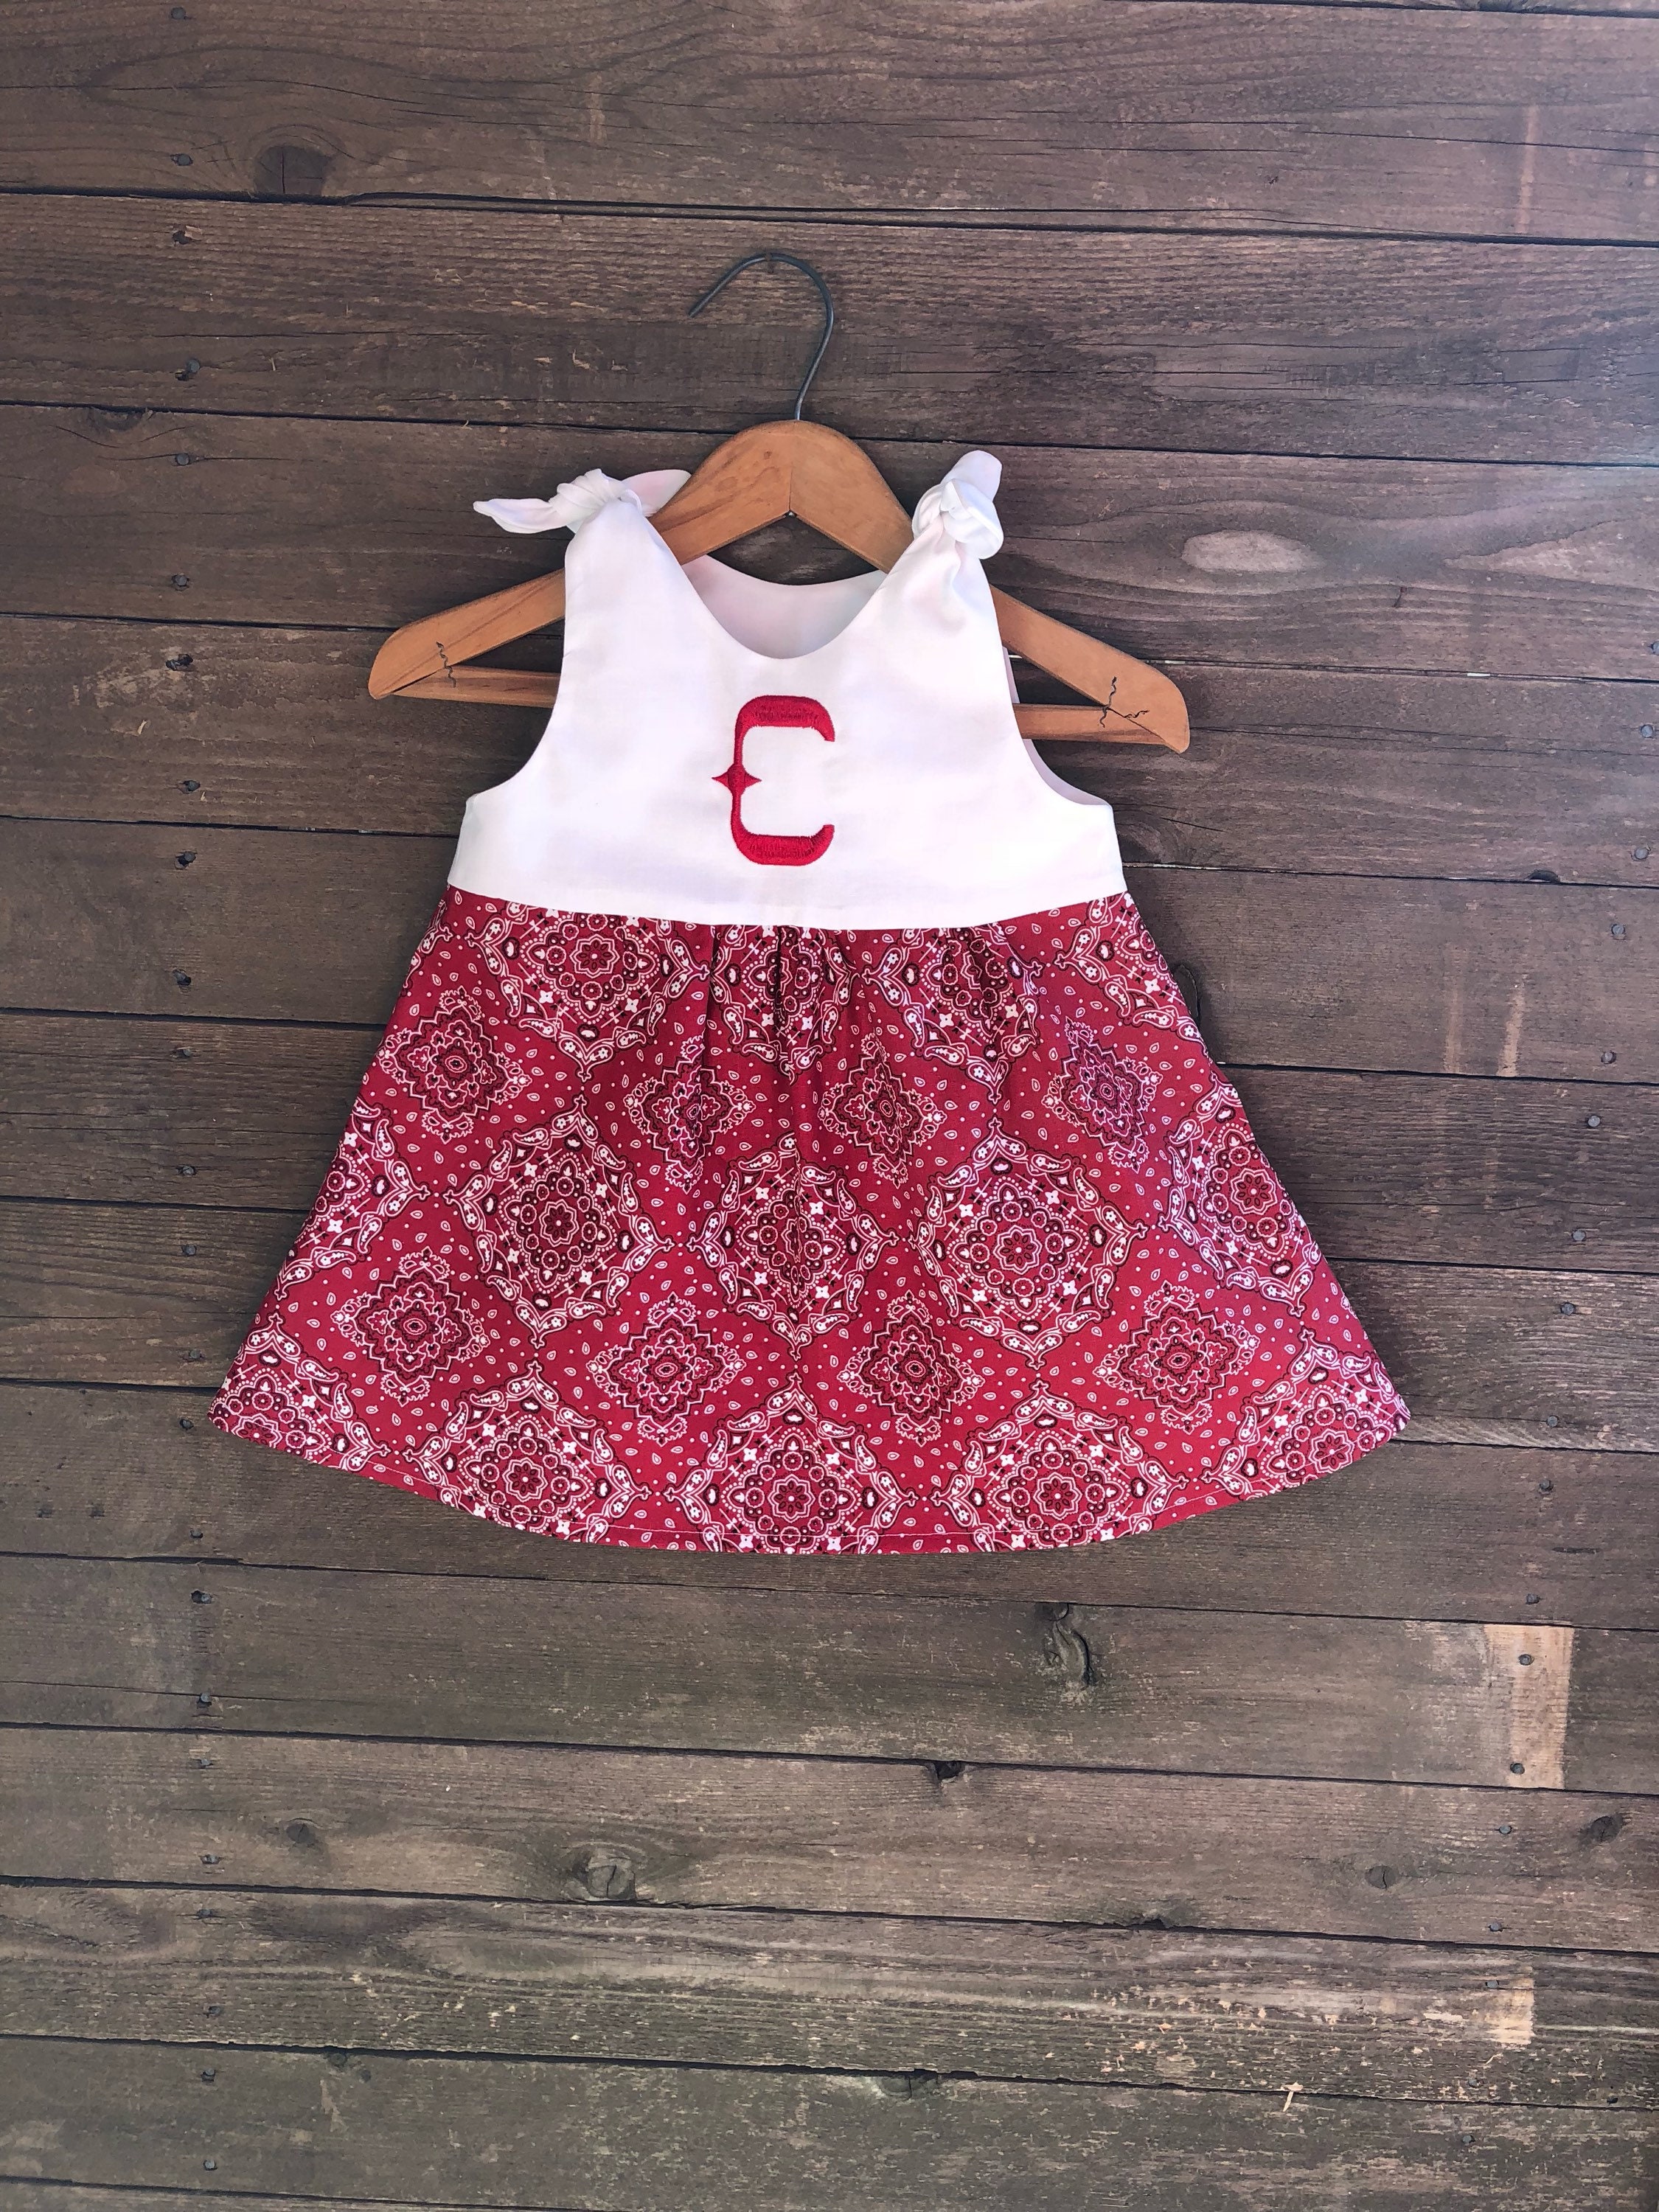 Red Cowgirl Monogrammed Dress Western Bandana Dress Baby | Etsy